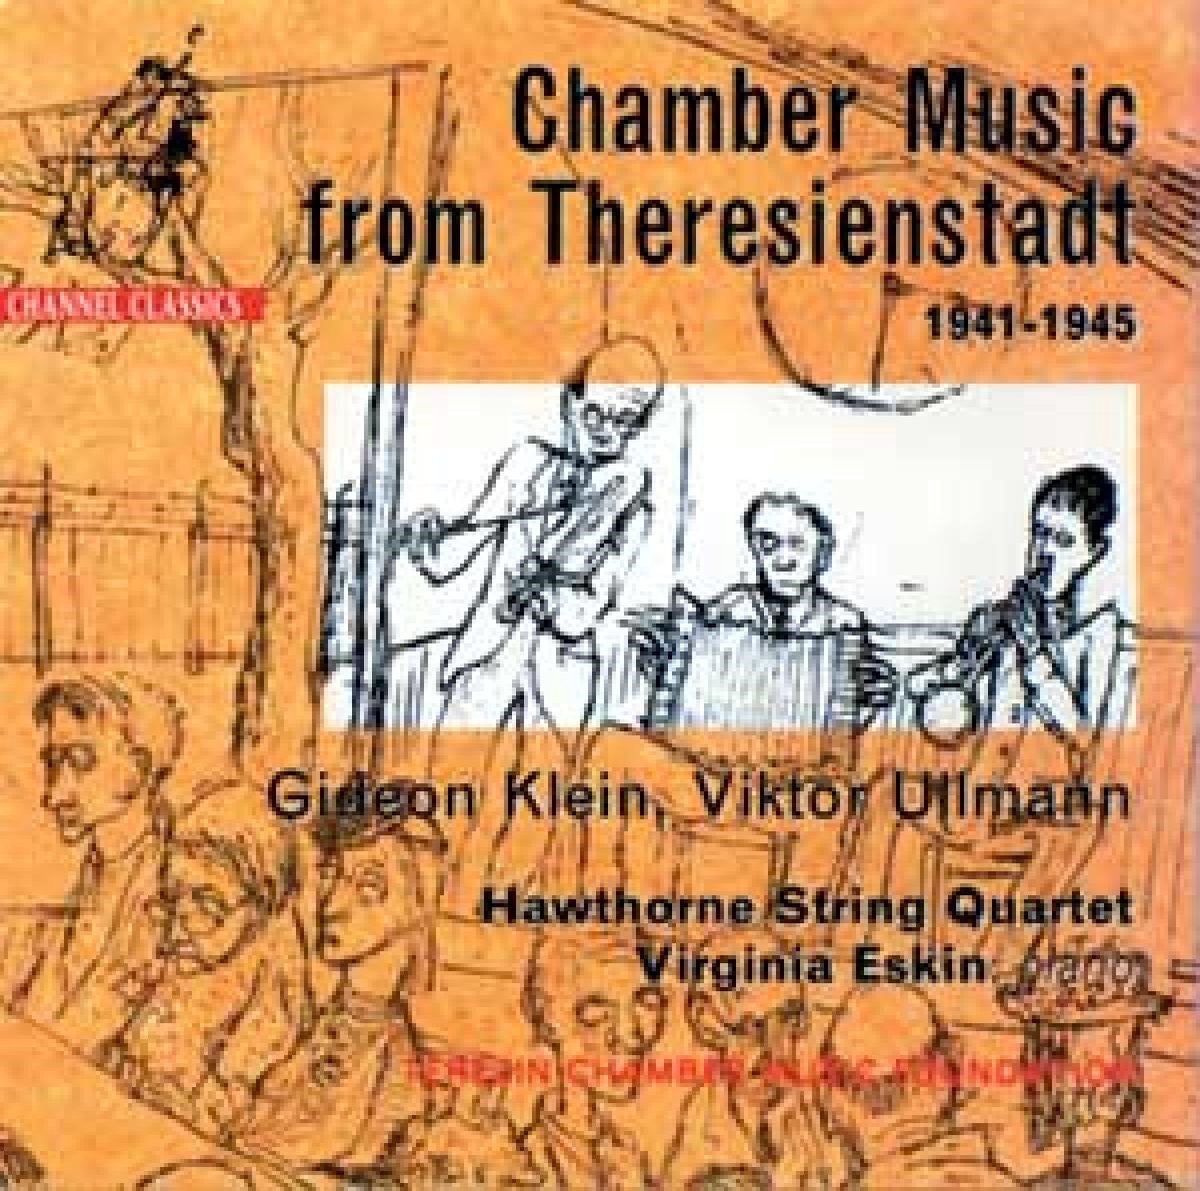 Virginia Eskin, Hawthorne String Quartet - Chamber Music From Theresienstadt (1941-1945) (CD) - Virginia Eskin, Hawthorne String Quartet